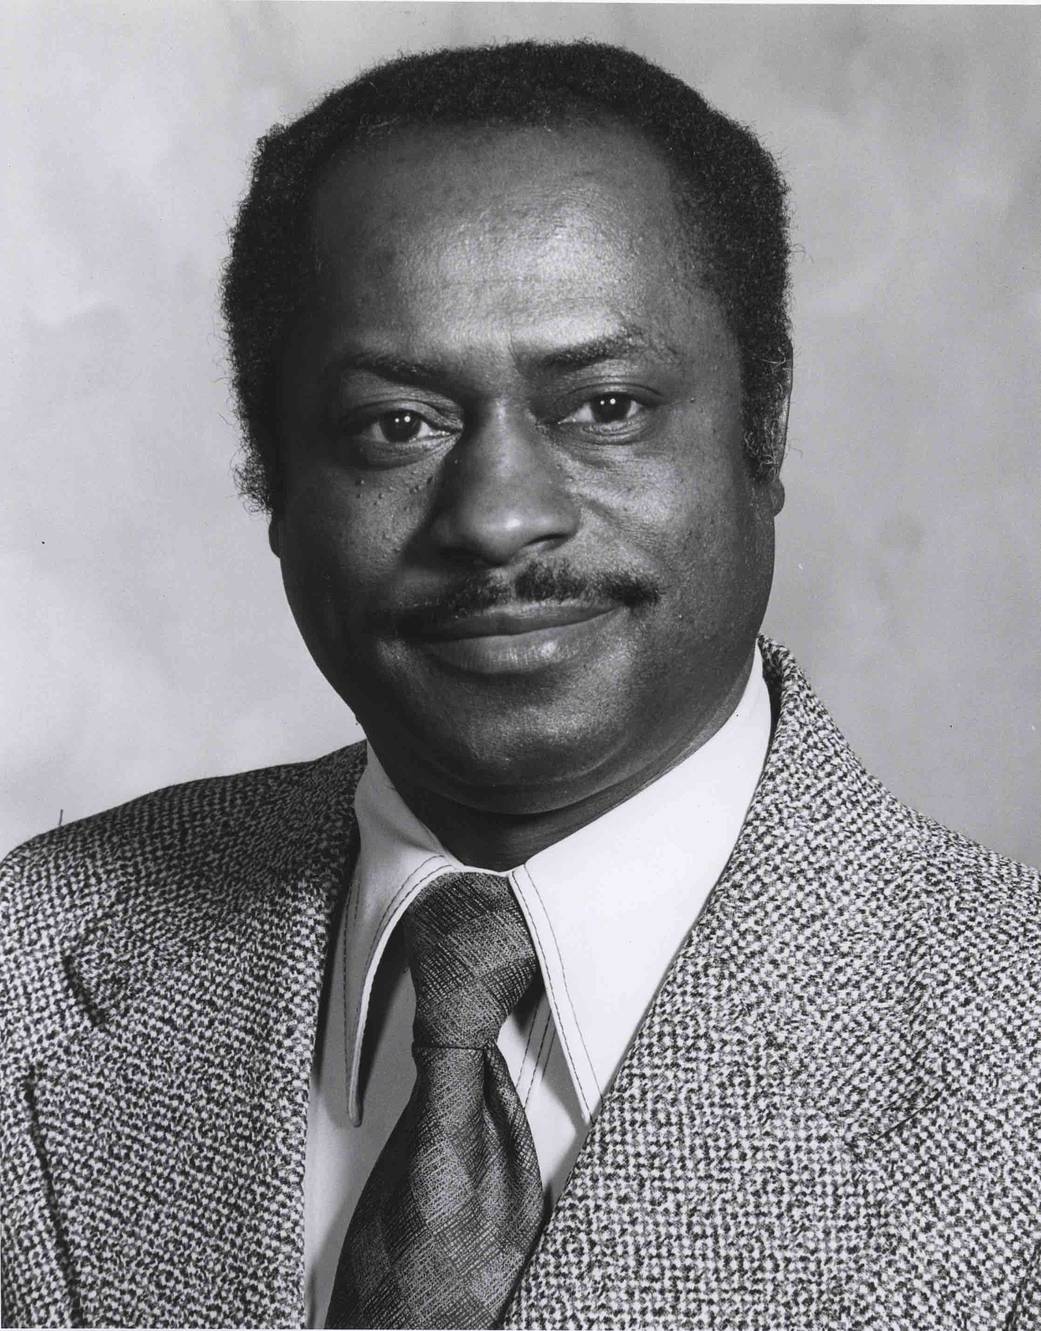 NASA portrait of Earnest C. Smith taken around 1980.